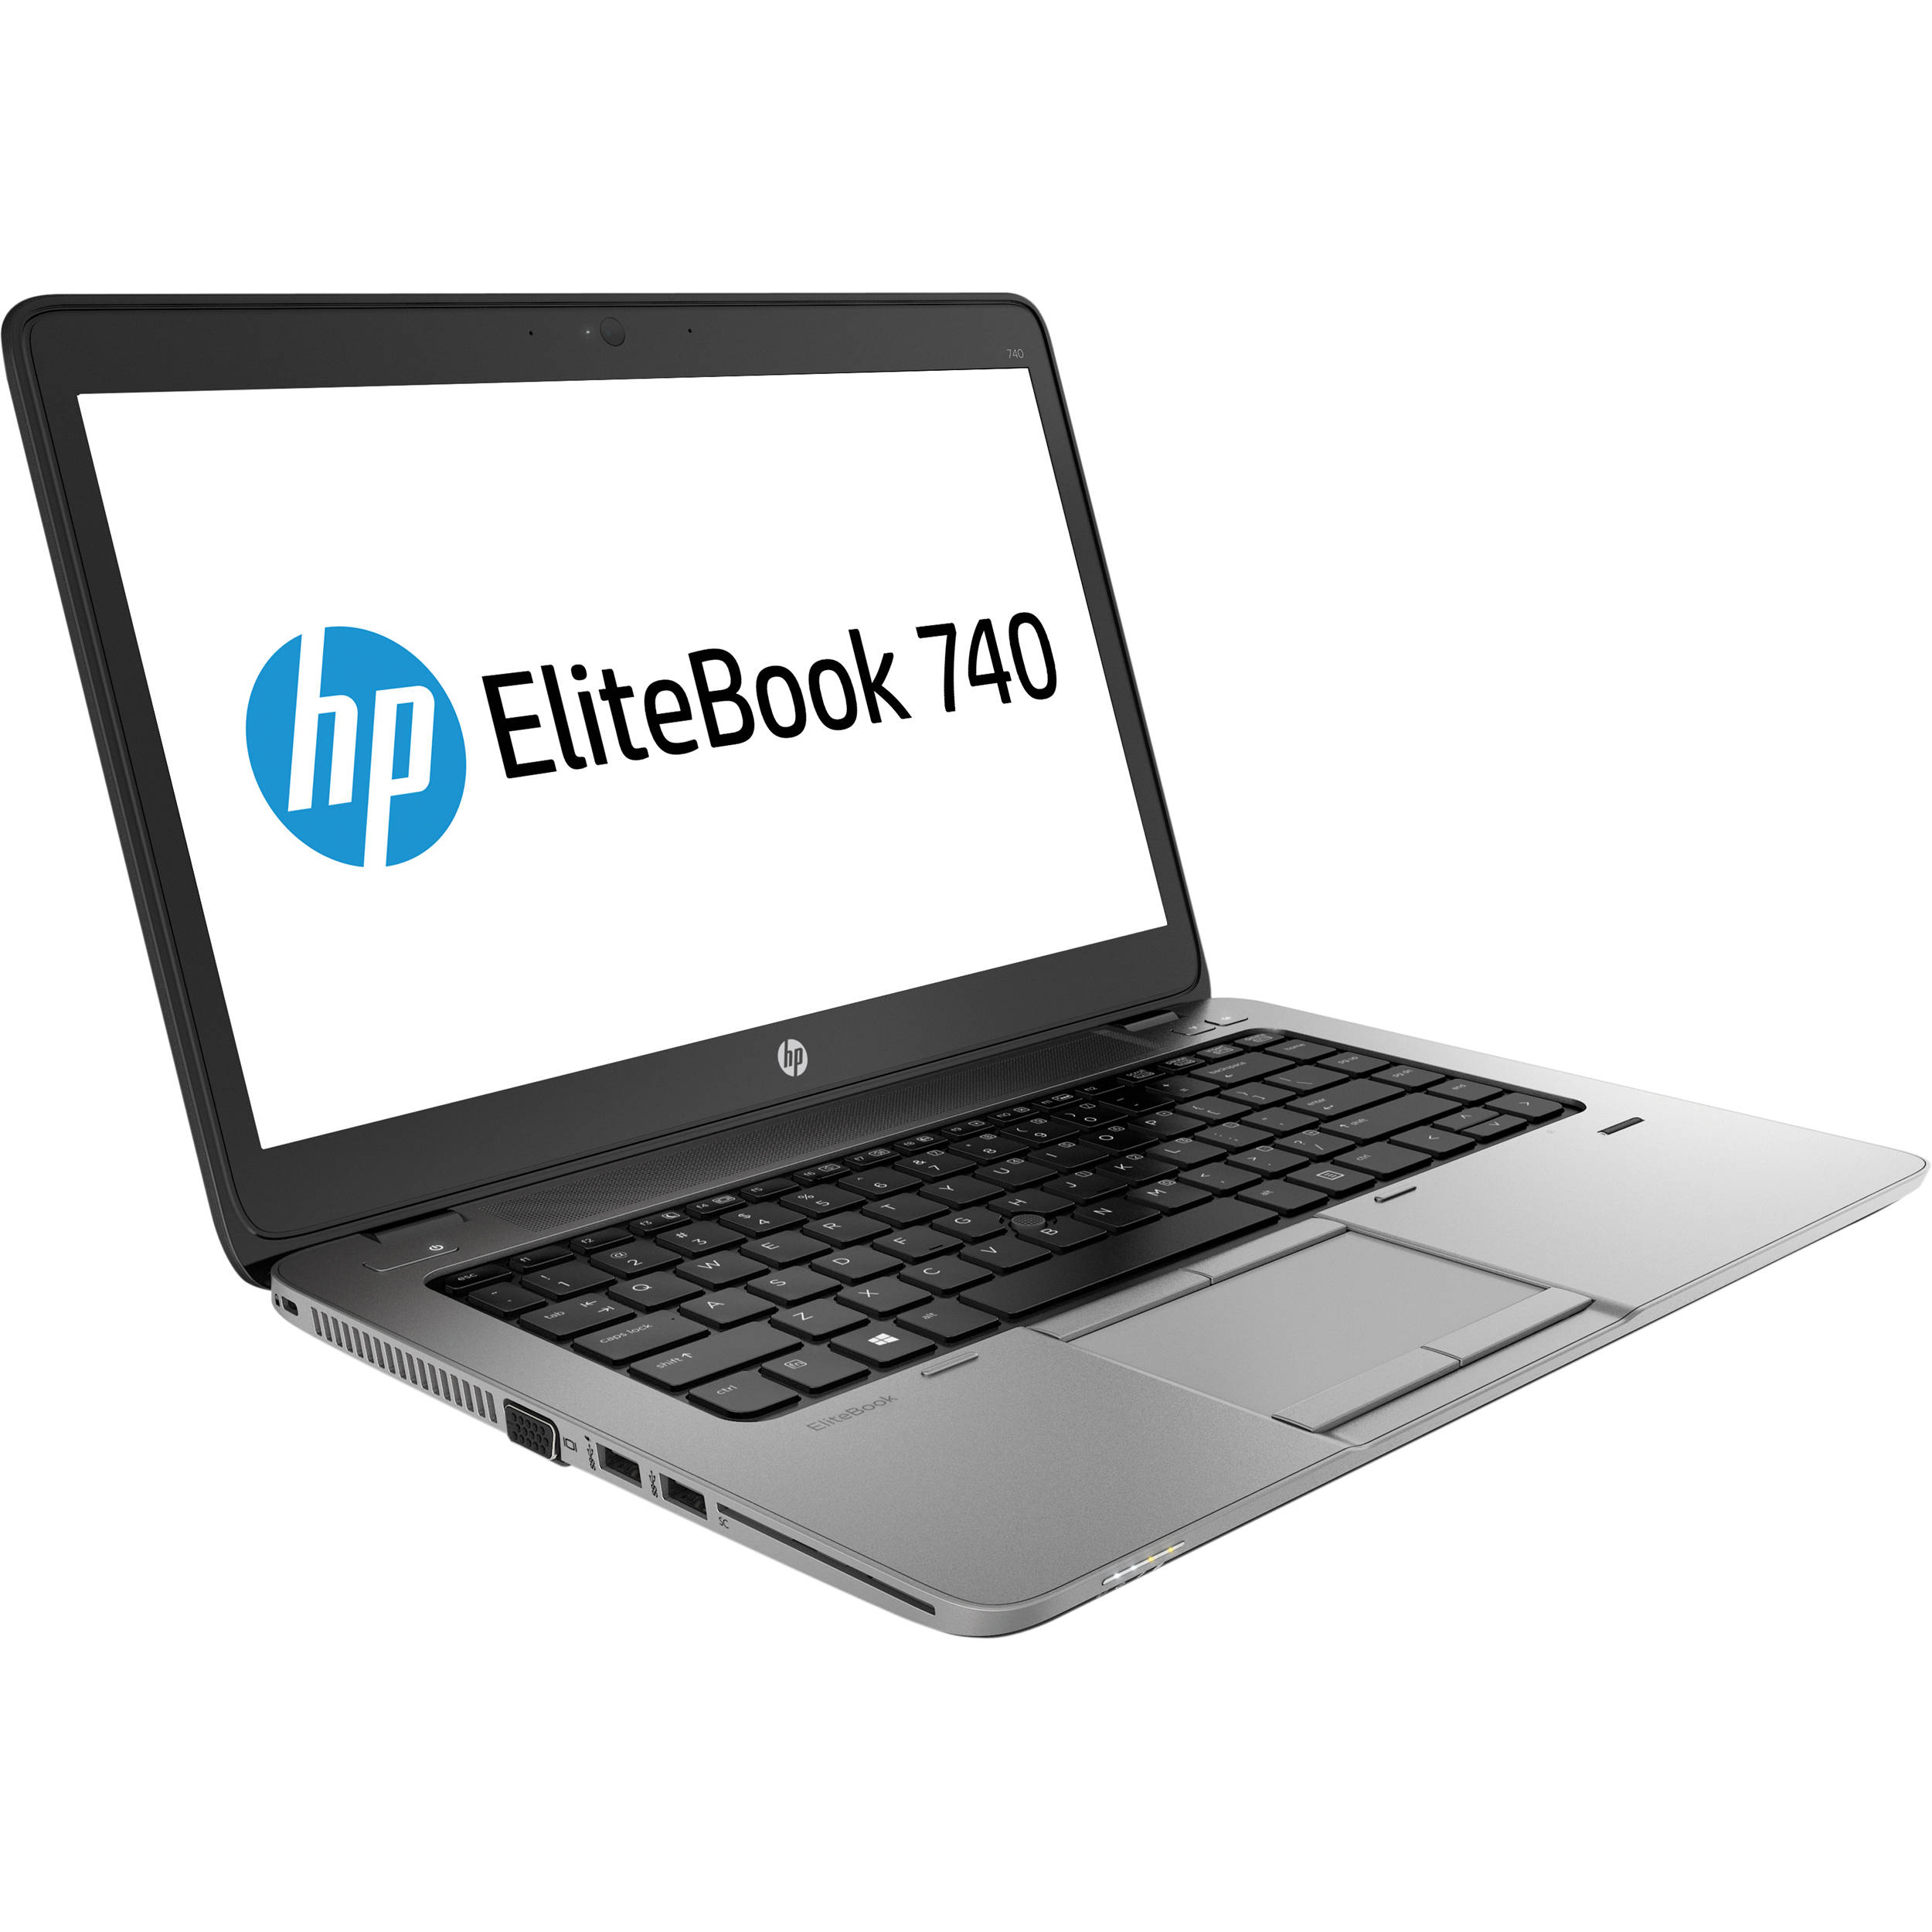 EliteBook 740 G1 Notebook PC